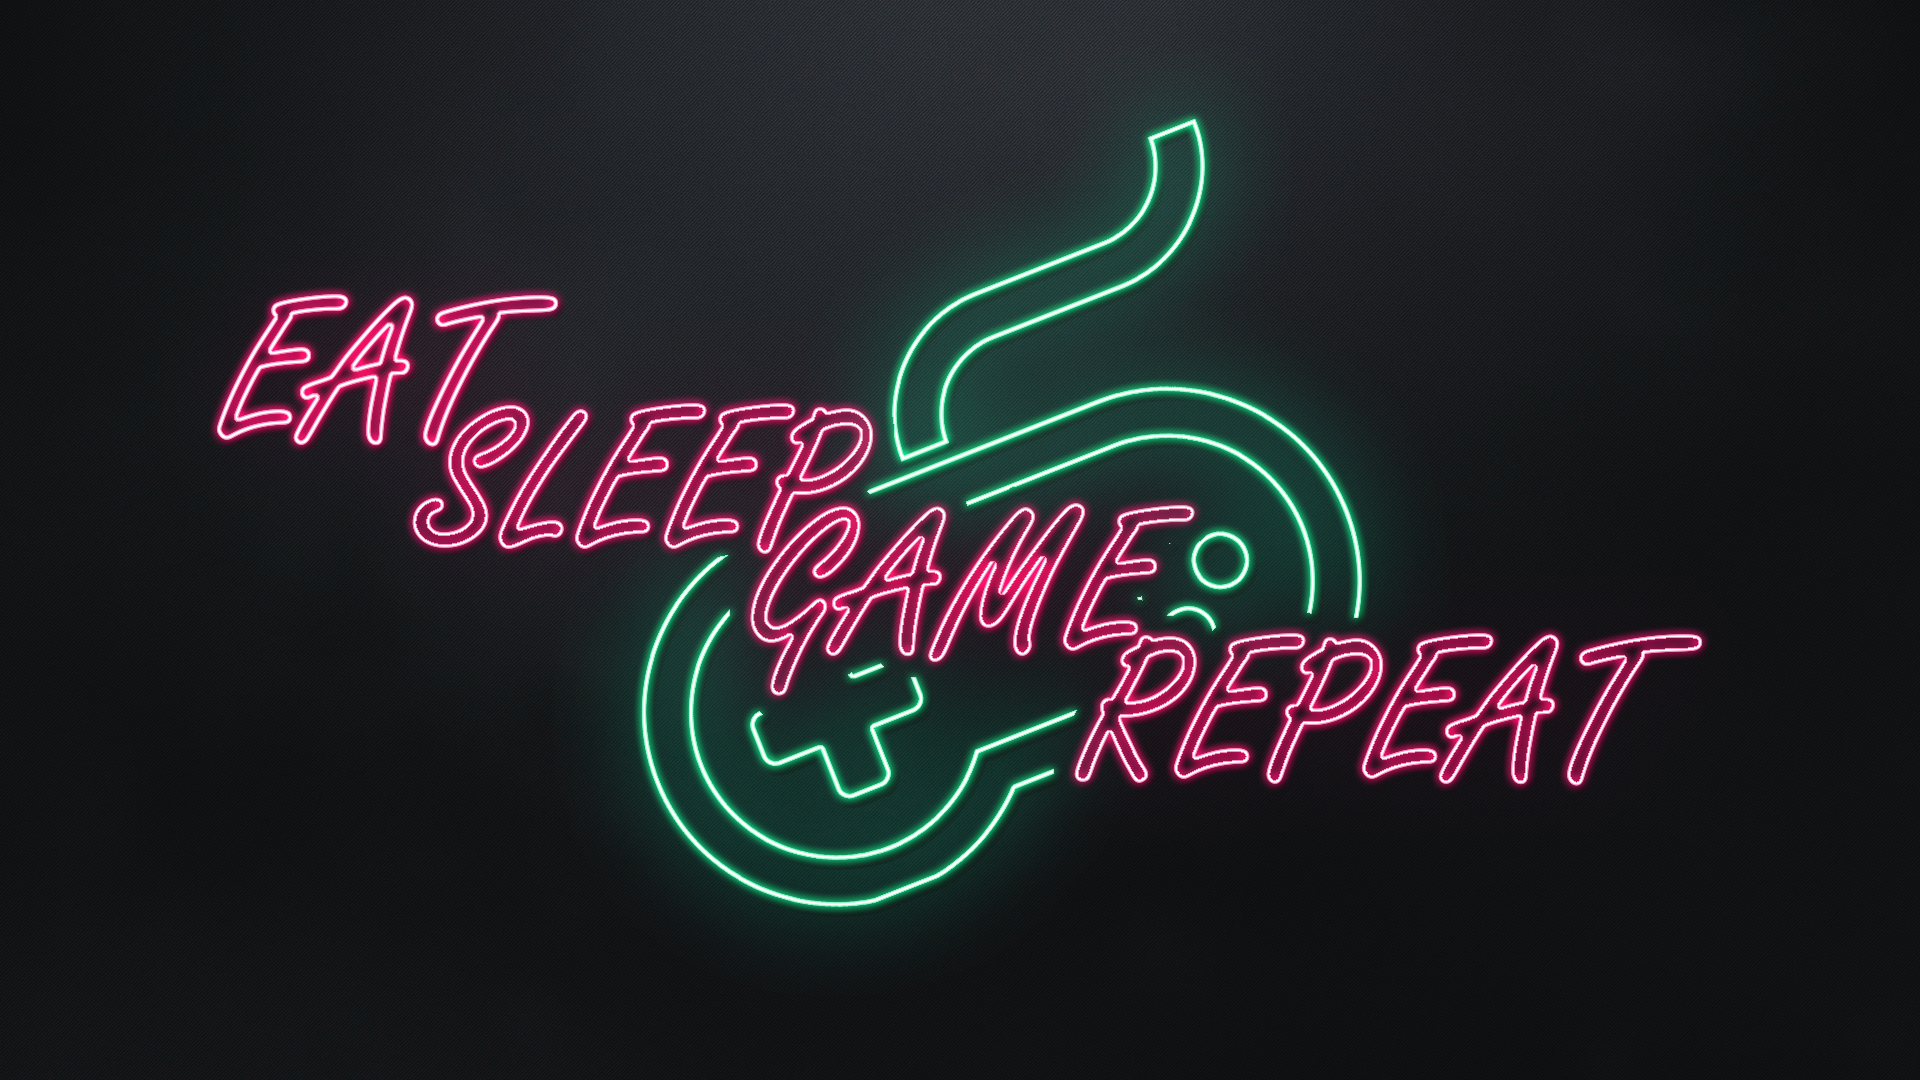 Eat sleep game repeat wallpaper rphotoshop